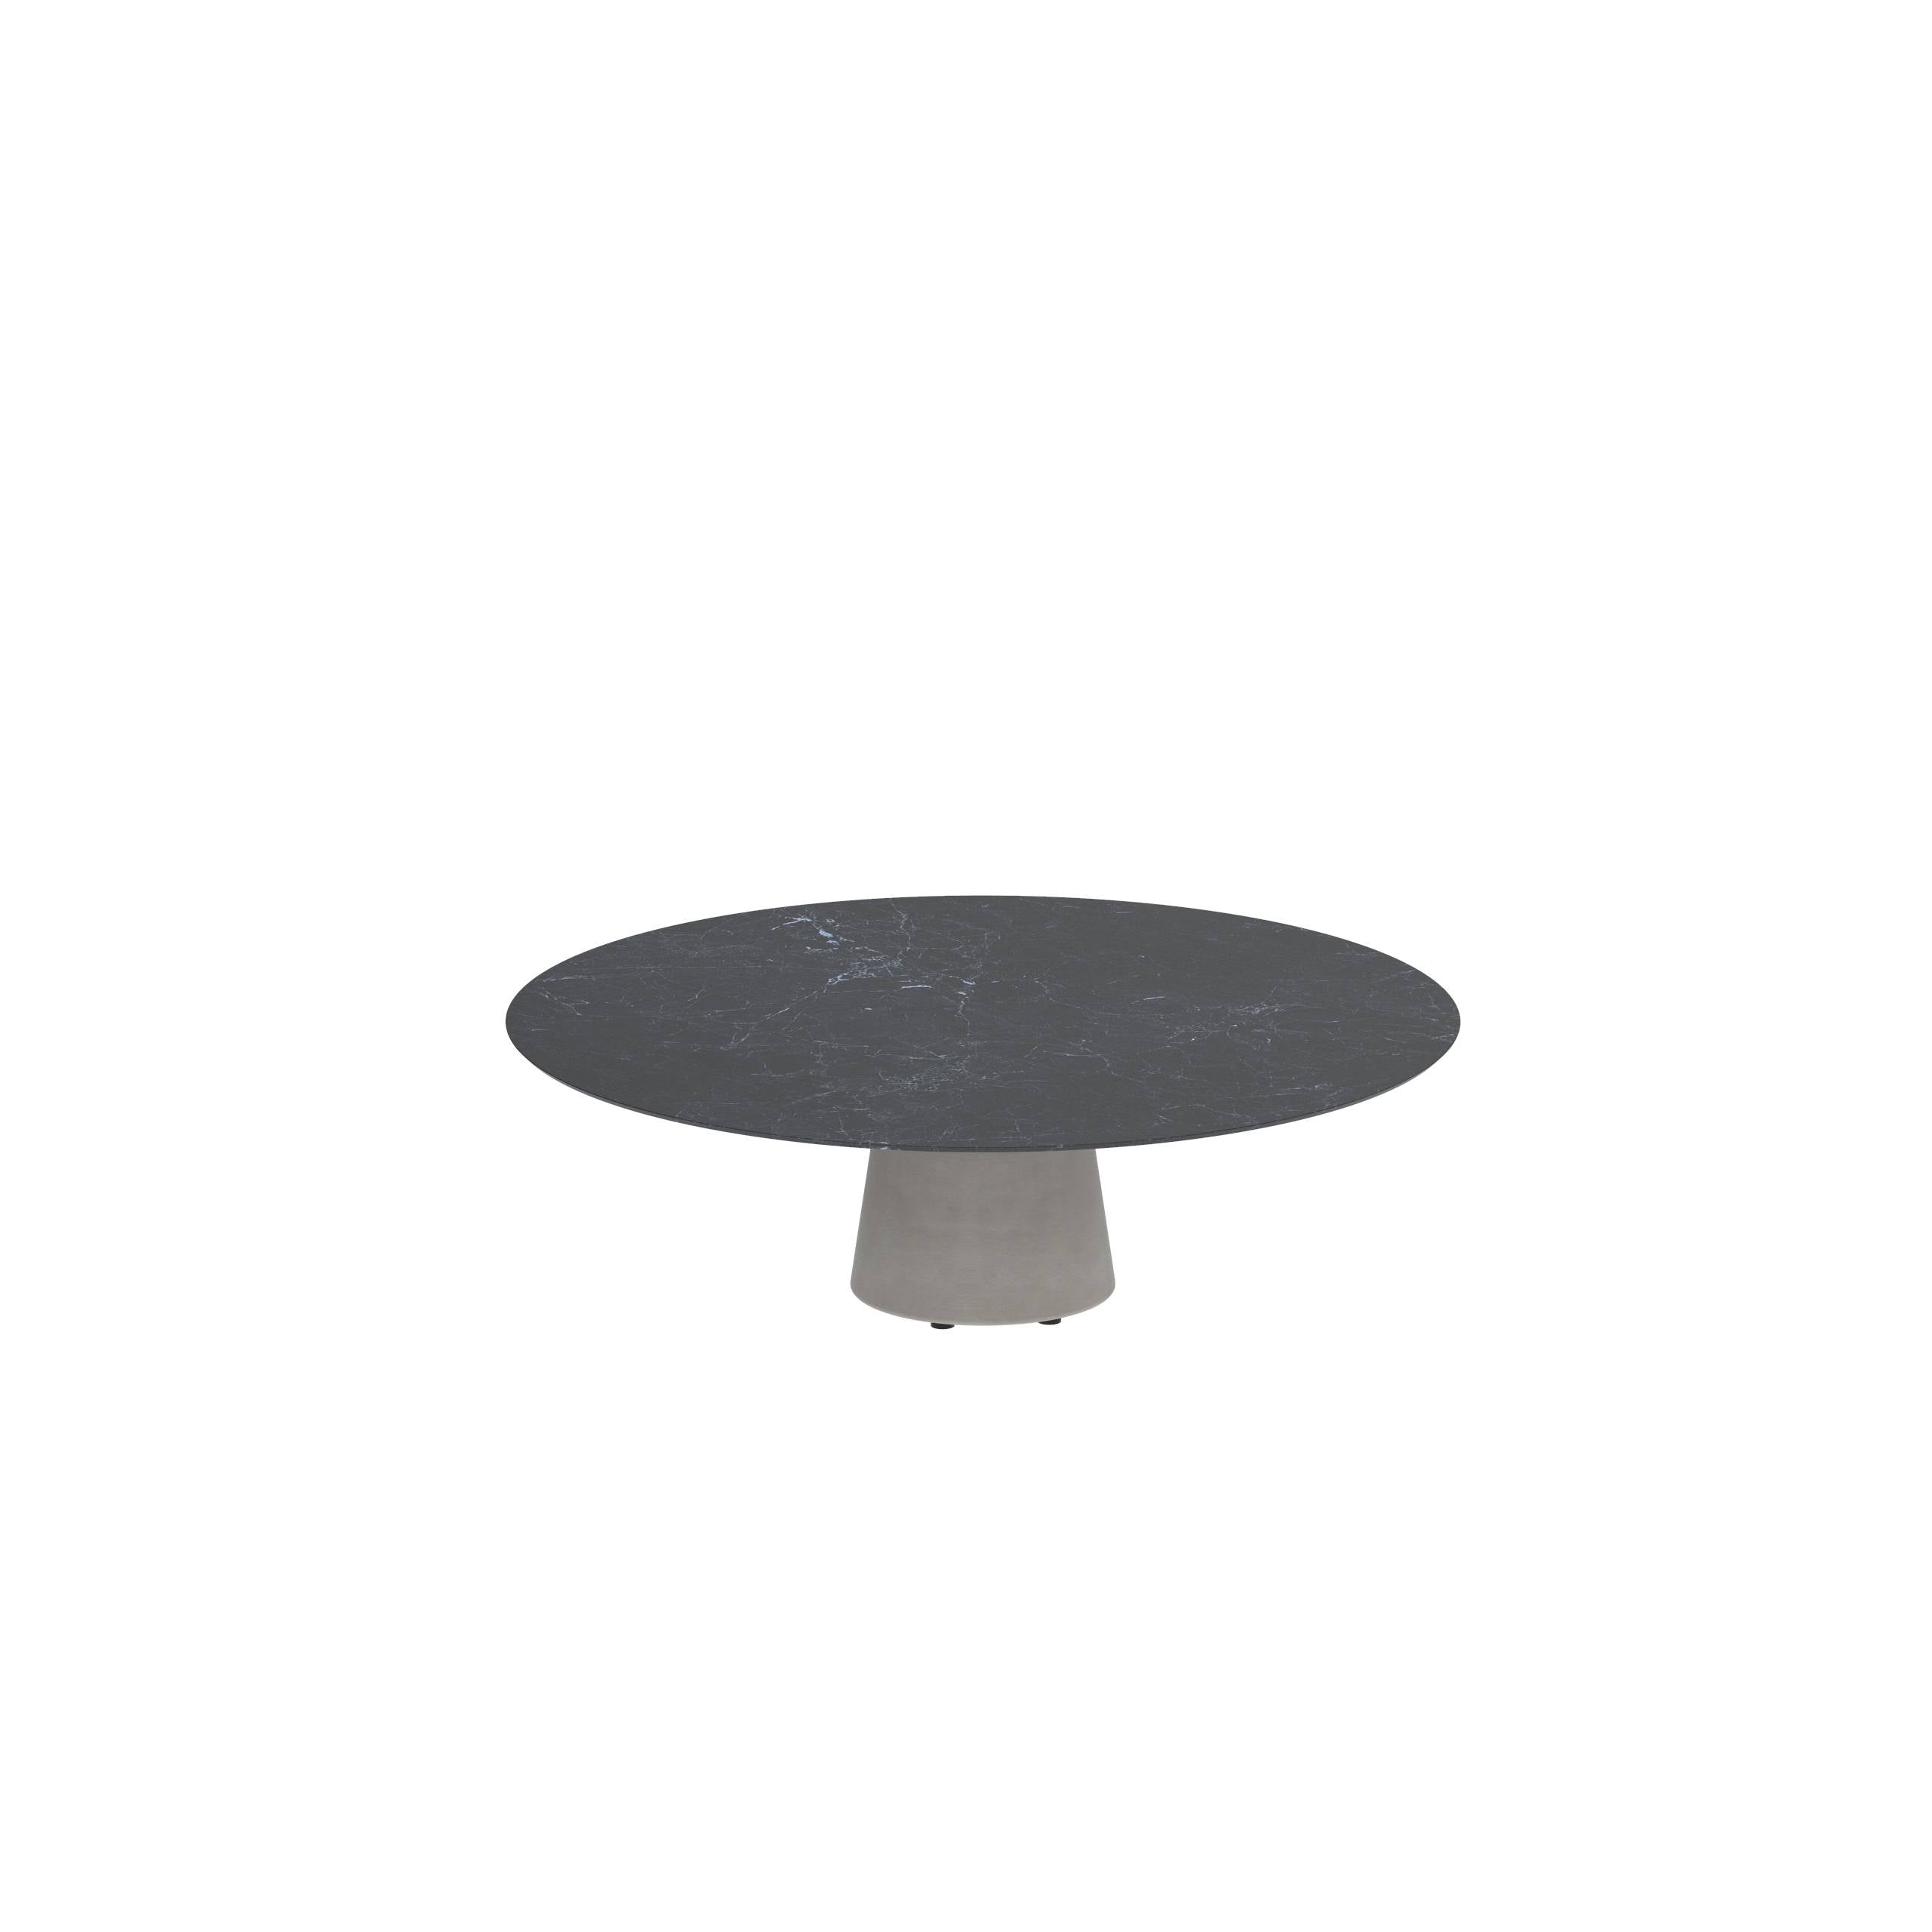 Conix Table Round Ø 160cm High Lounge Leg Concrete Cement Grey - Tabletop Ceramic Nero Marquina